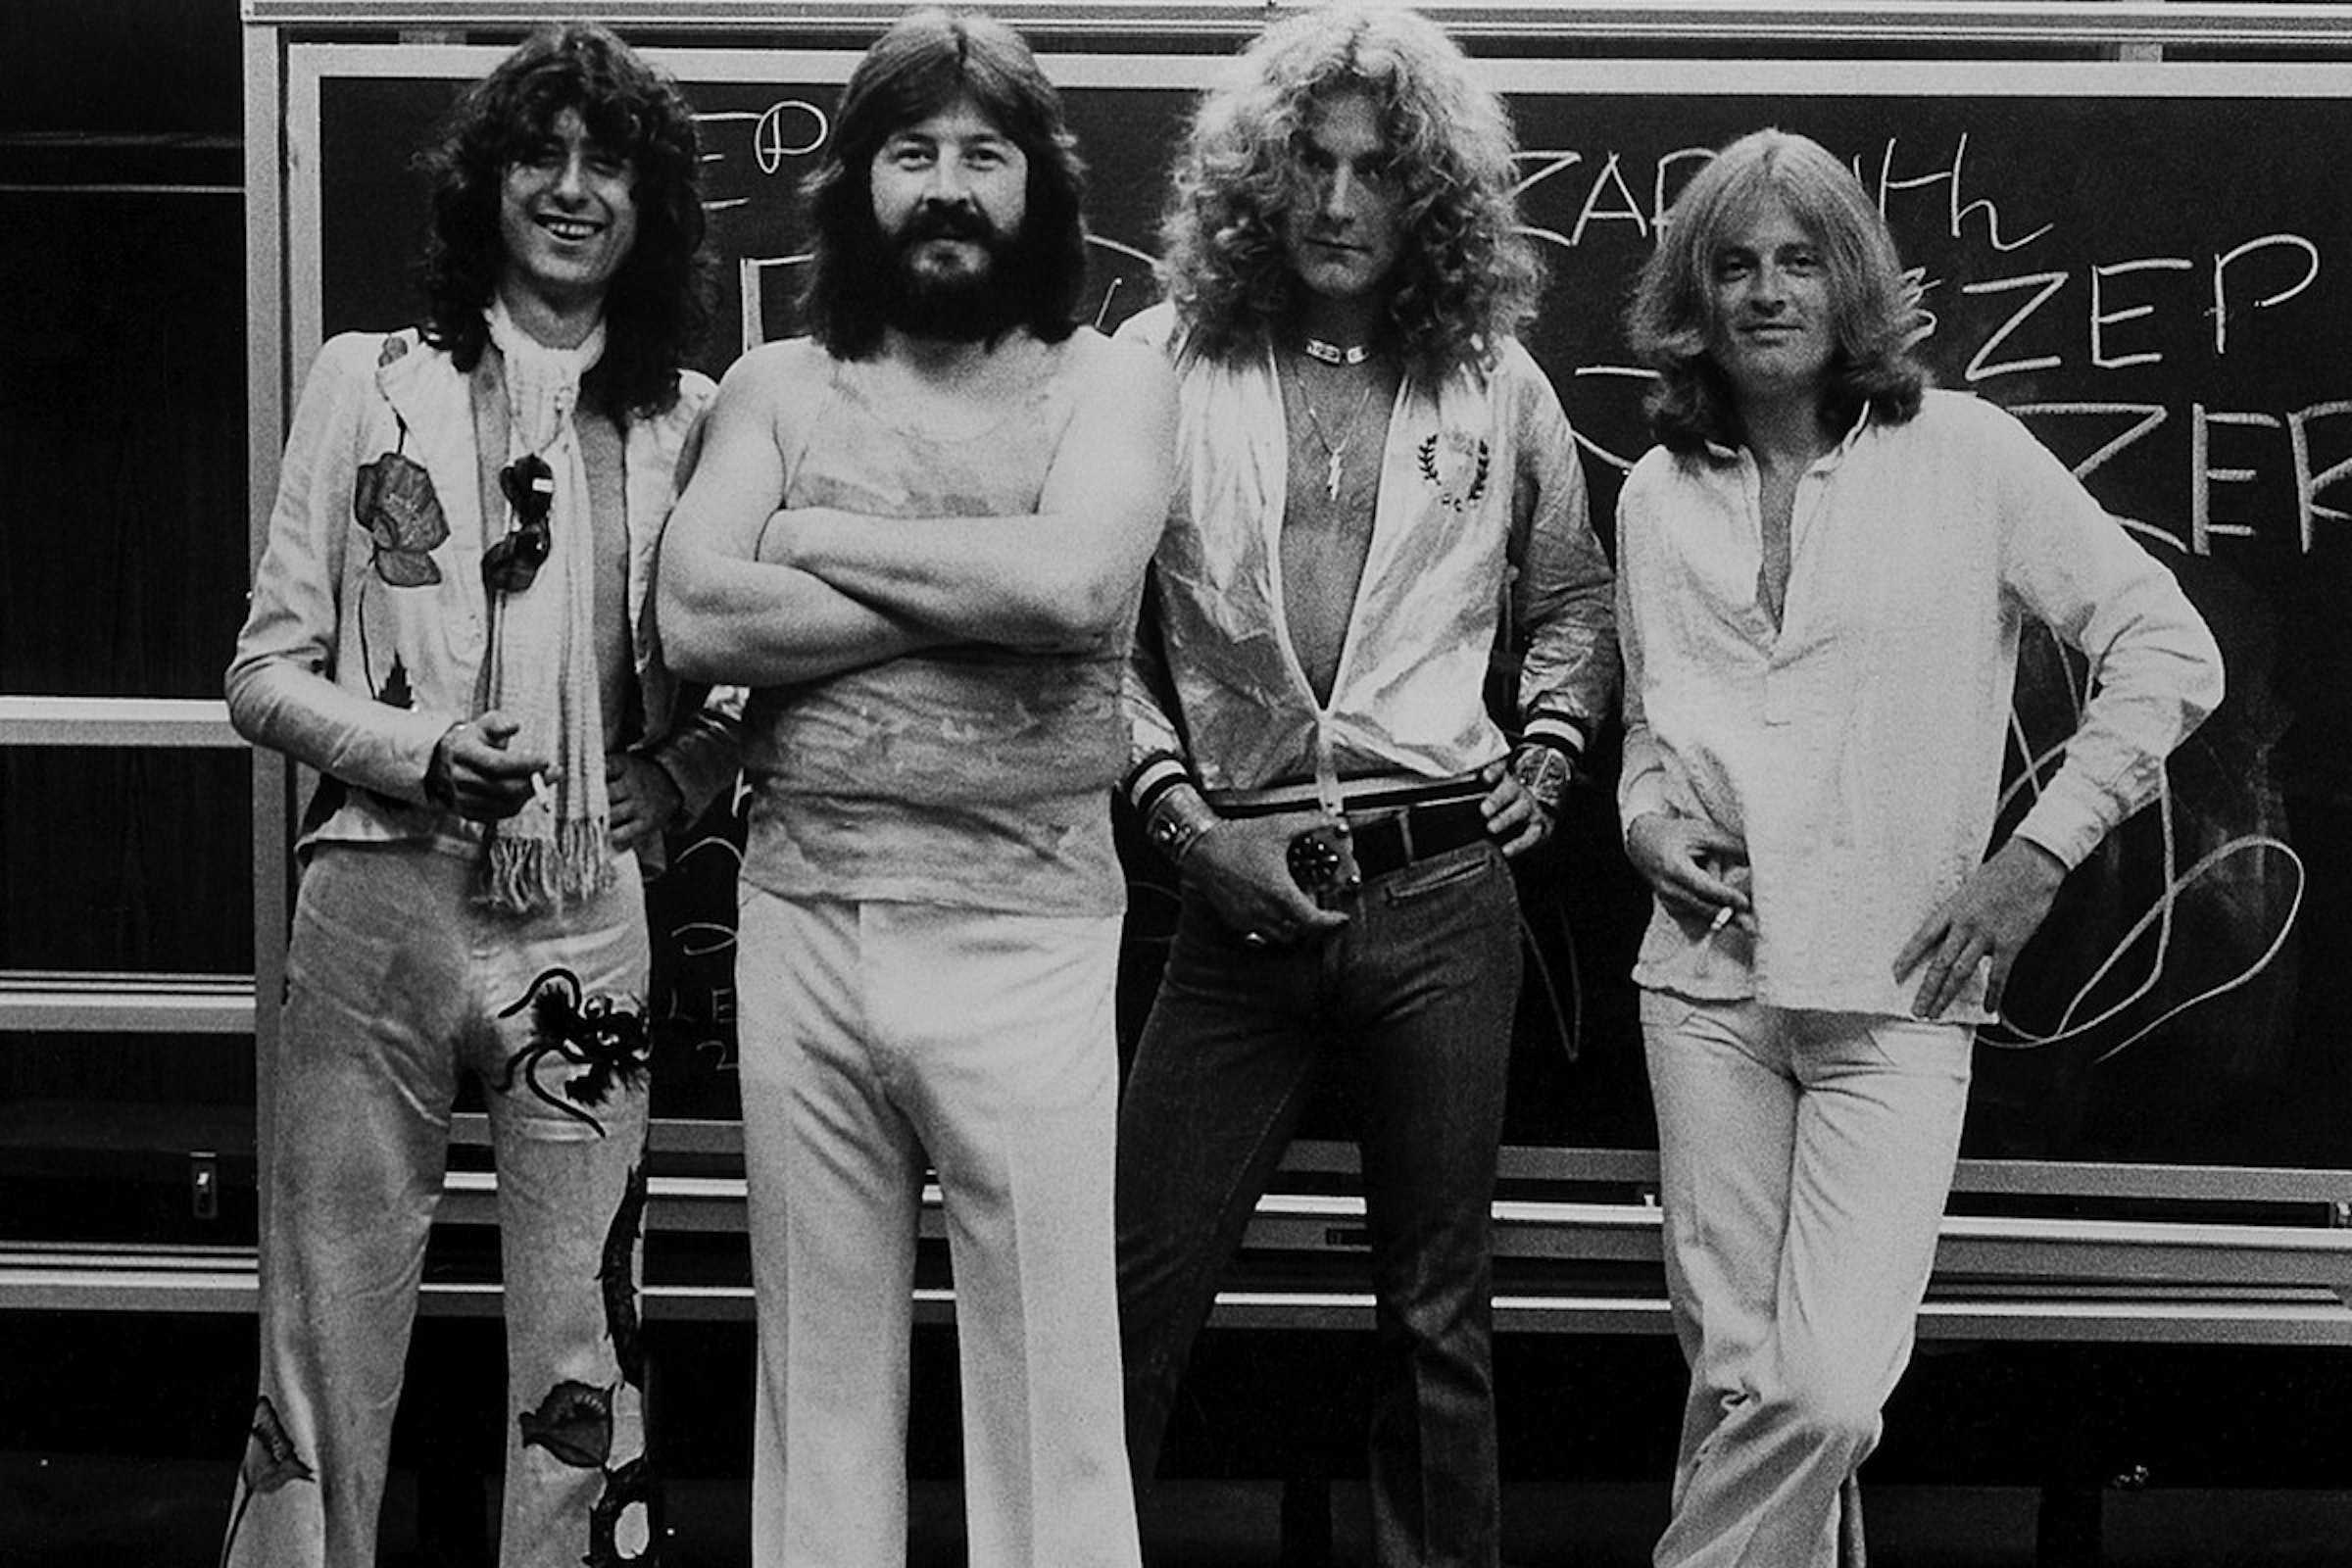 Лед зеппелин лучшие песни слушать. Группа led Zeppelin. Рок группа лед Зеппелин. Лед Цепелин рок группа. Группа led Zeppelin 1968.